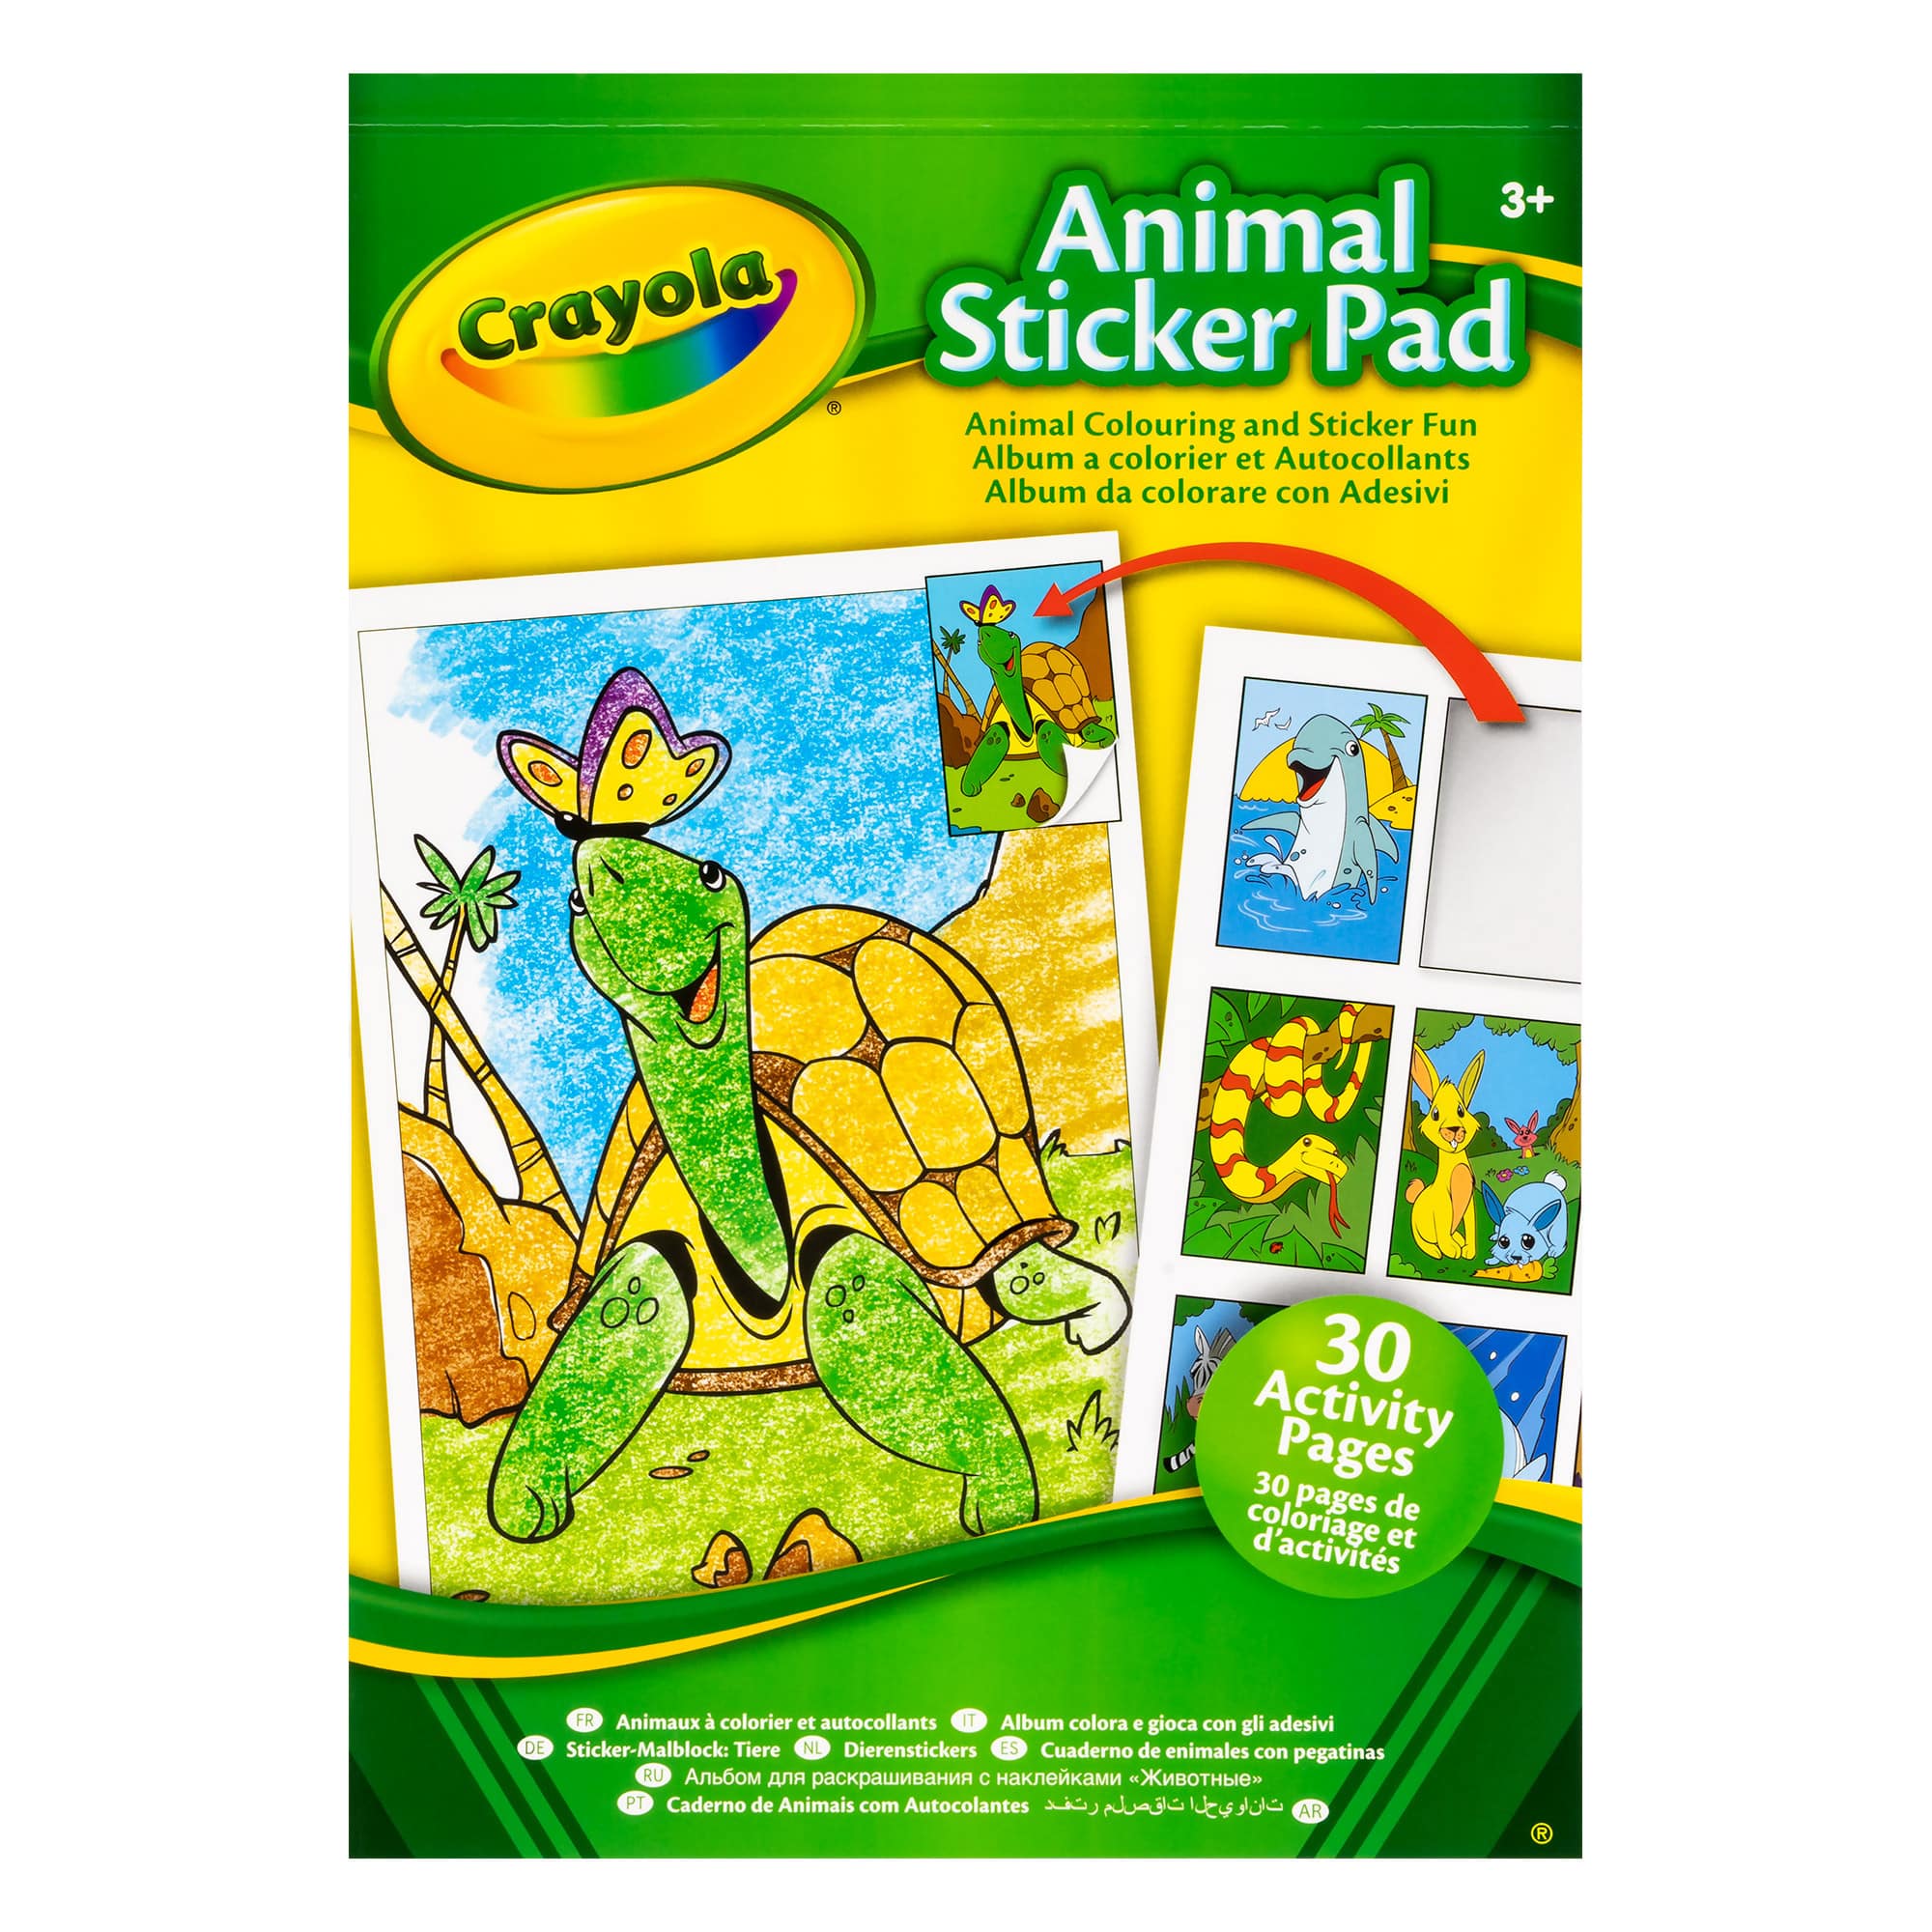 Crayola Animal Sticker Pad - 30 Activity Pages